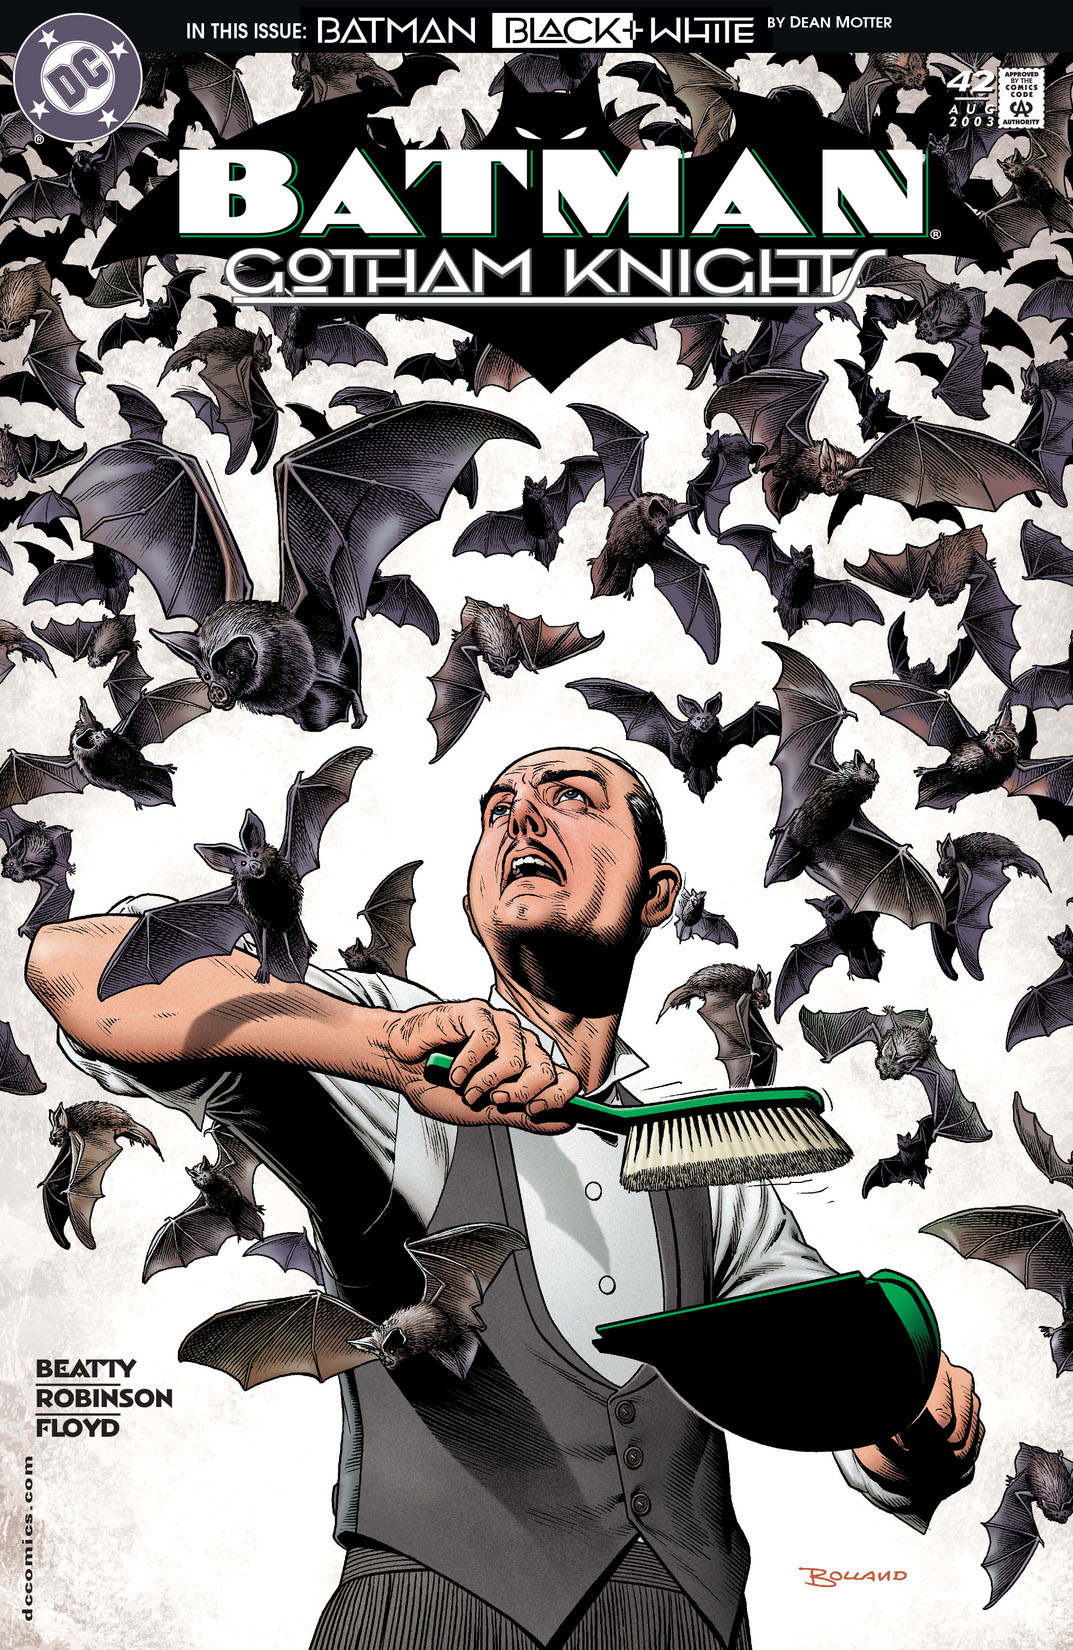 Batman: Gotham Knights #42 preview images